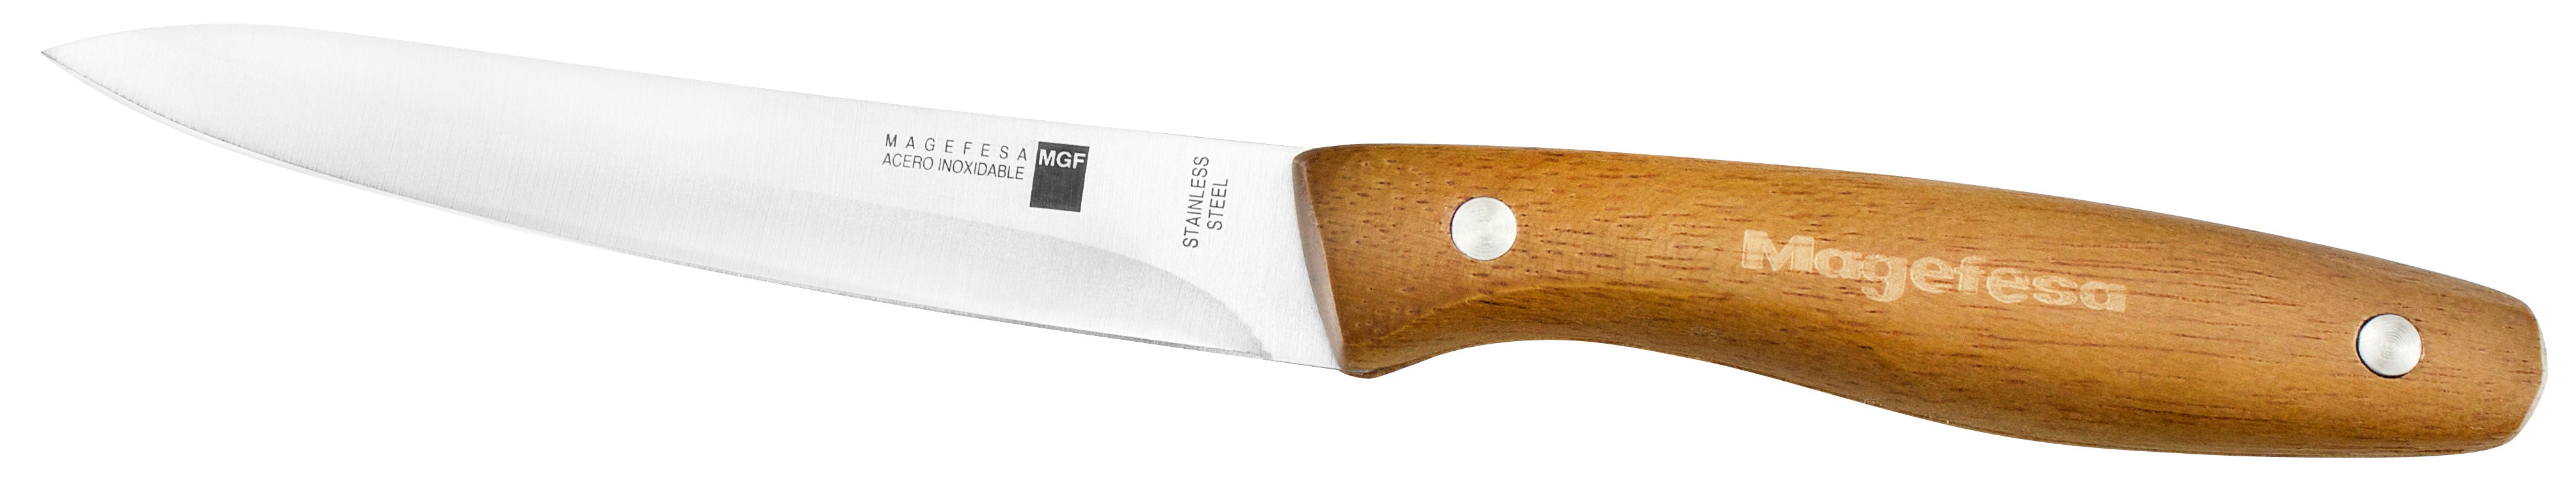 Magefesa, Couteau utilitaire Magwood